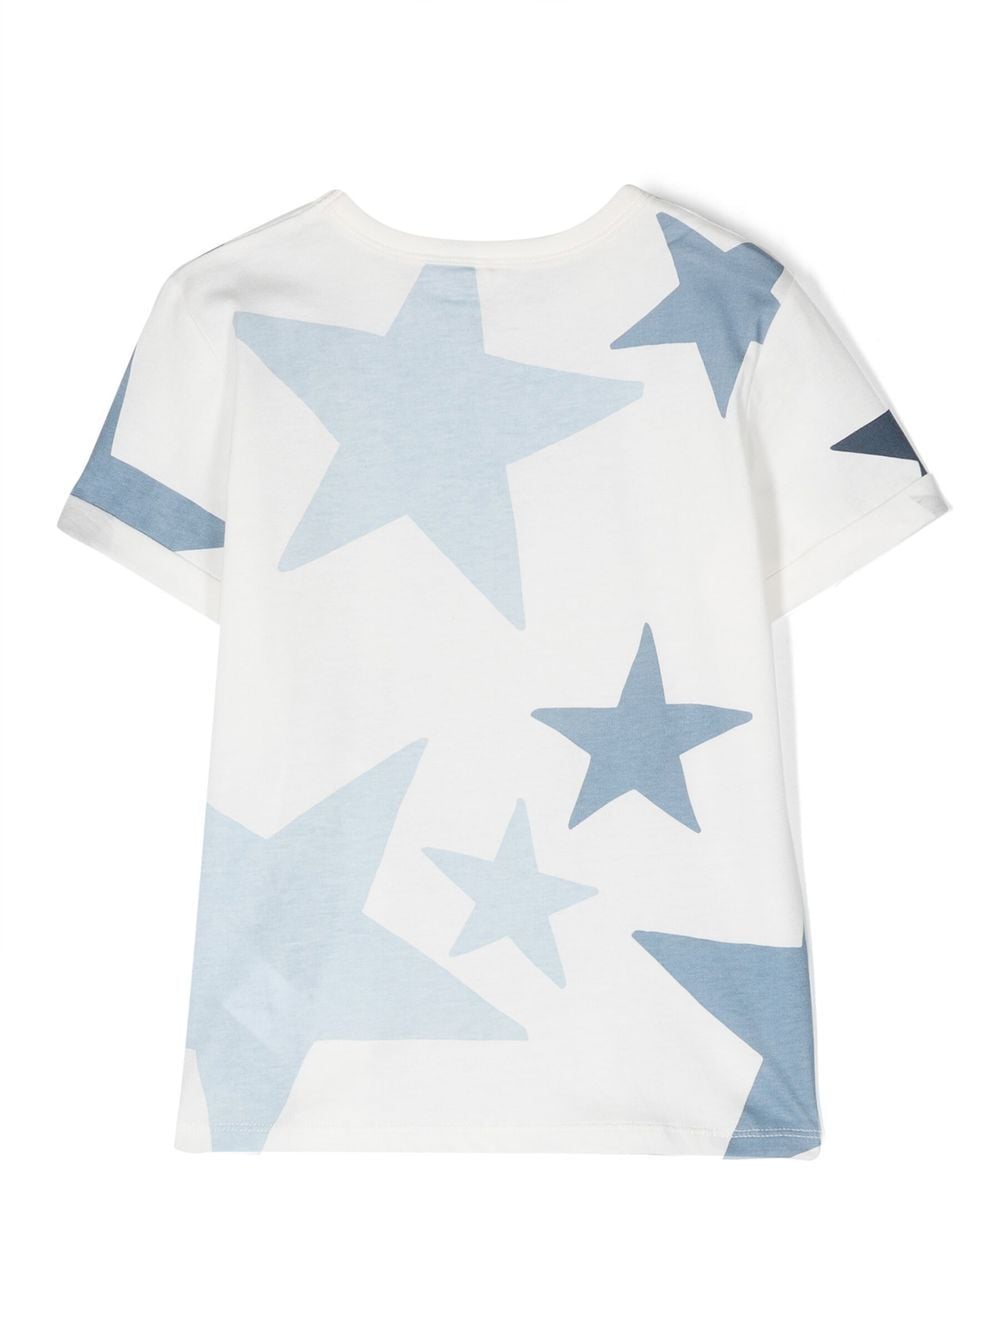 Star-print short-sleeve T-shirt<BR/><BR/><BR/>